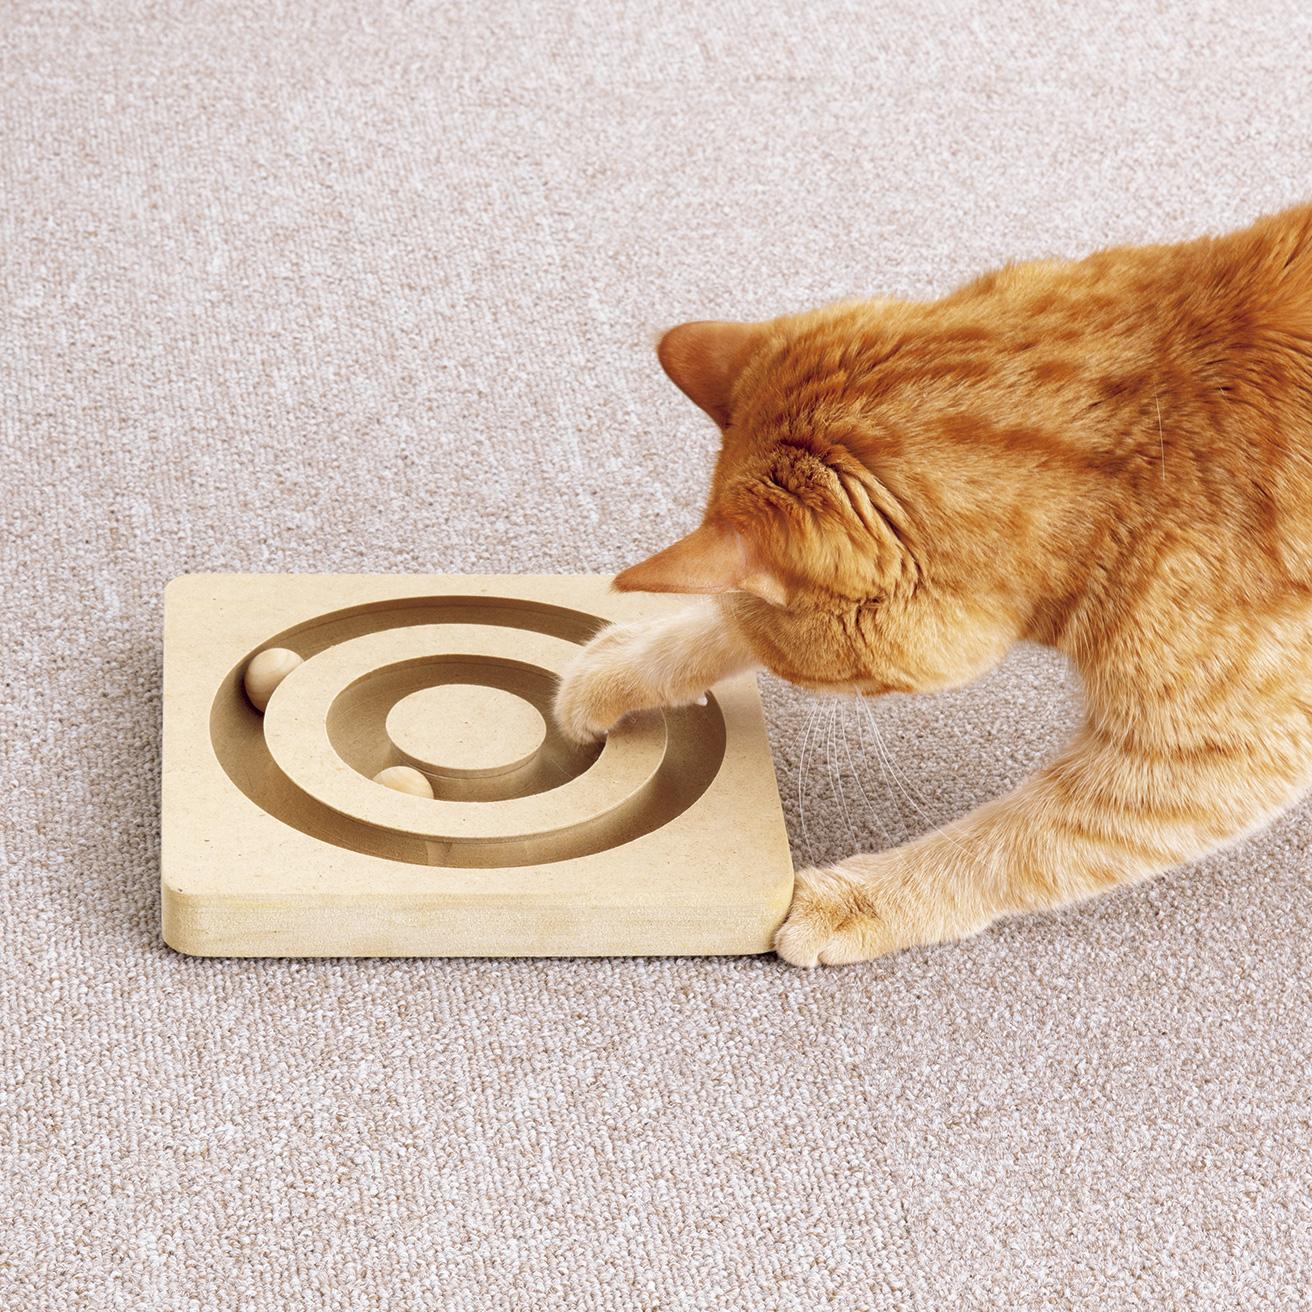 KARLIE／キティブレイントレインラウンドアバウト
ベルギーの猫用知育玩具。溝のボールが取れそうで取れず、猫の狩猟本能を刺激。W19×D19×H2.5cm 1,850円（ALLFORWAN’s LIFE 公式サイト）。